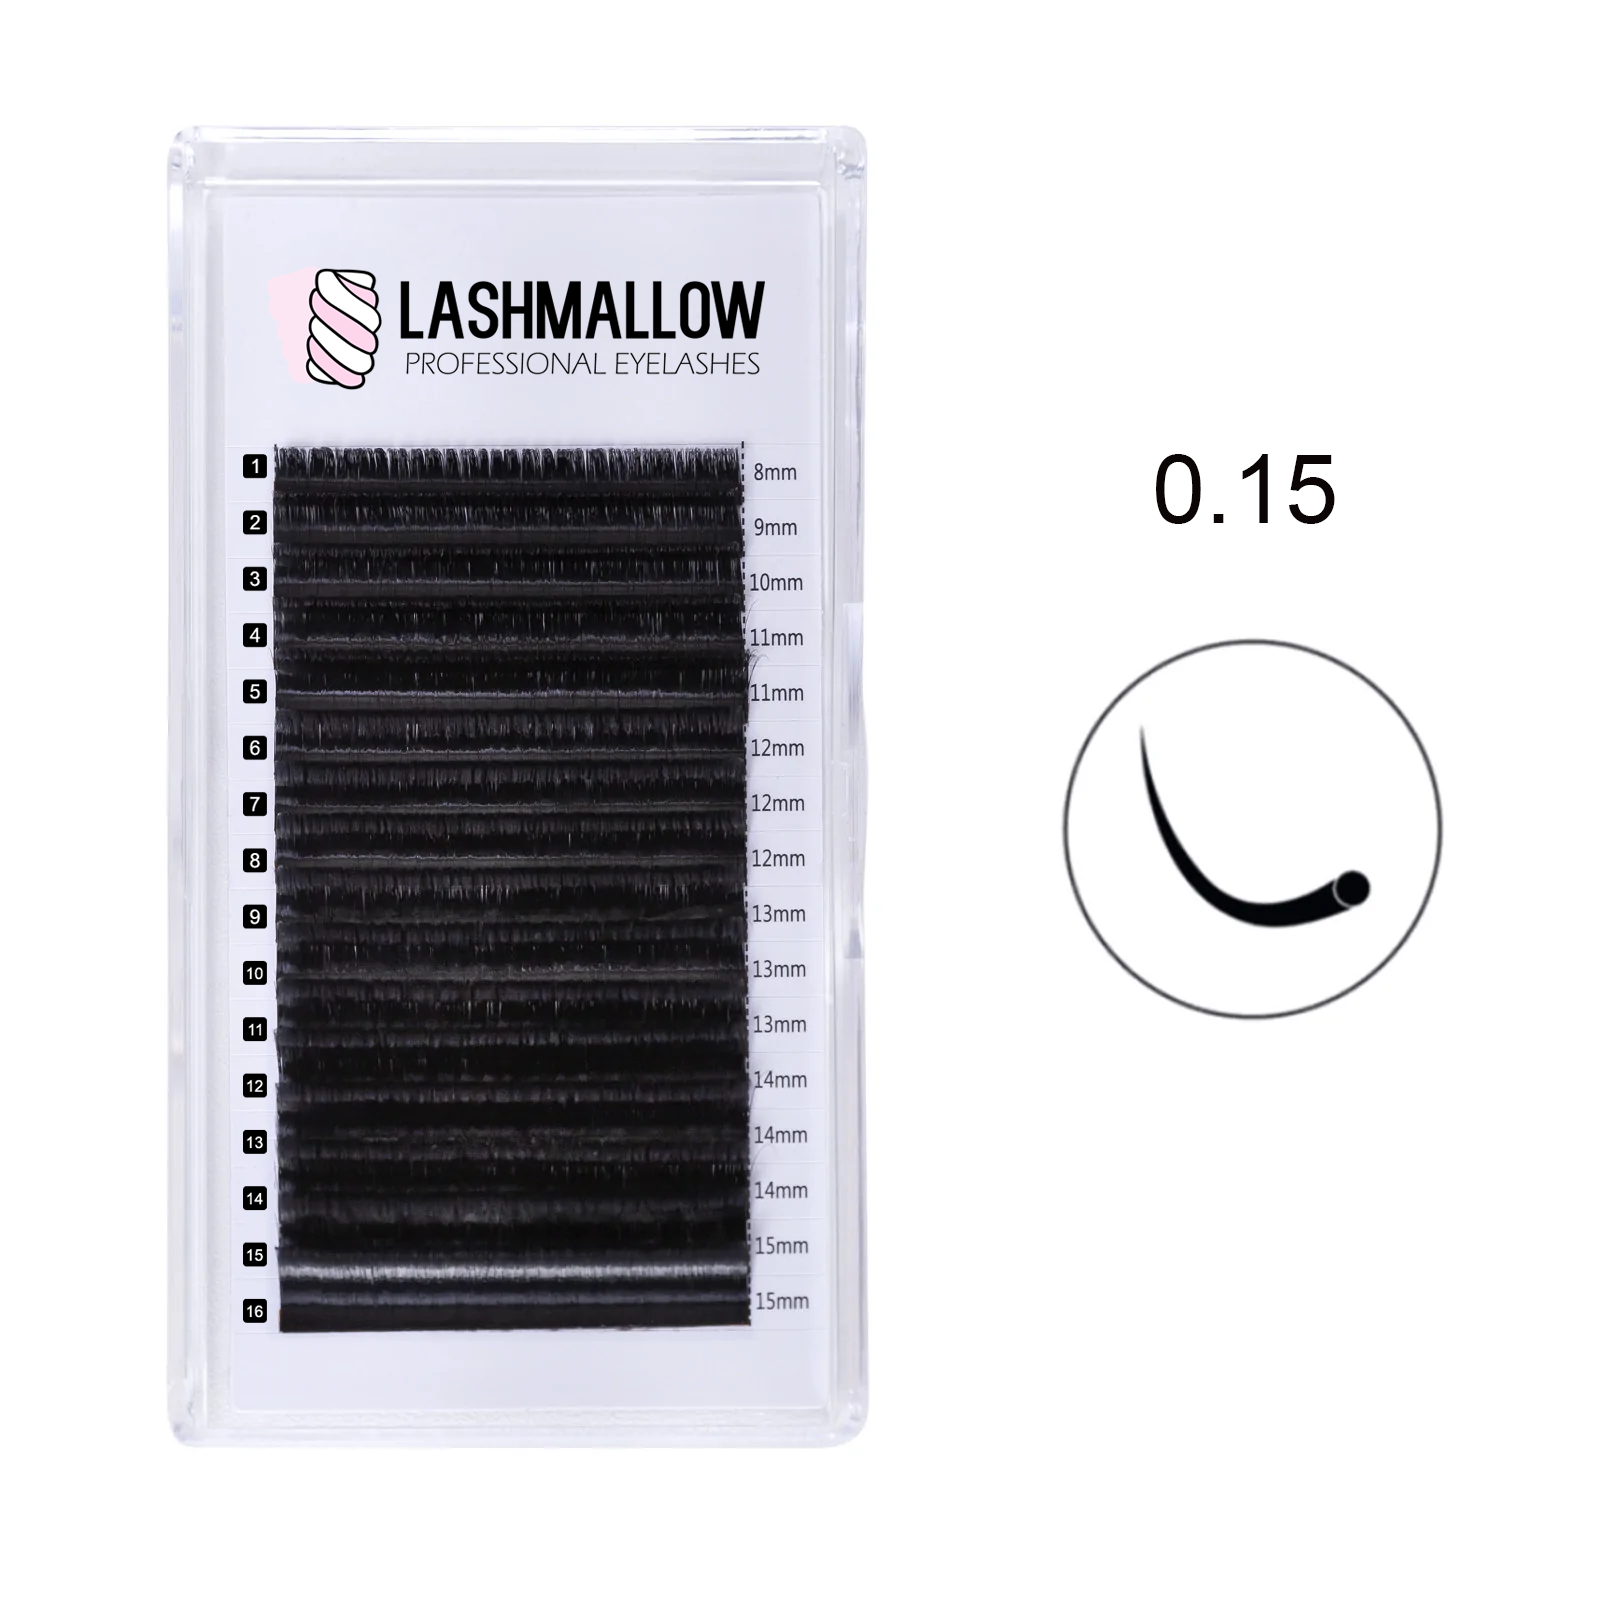 0.15 Premium Individual Classic Lashes 8-16mm Eyelash Extension Trays